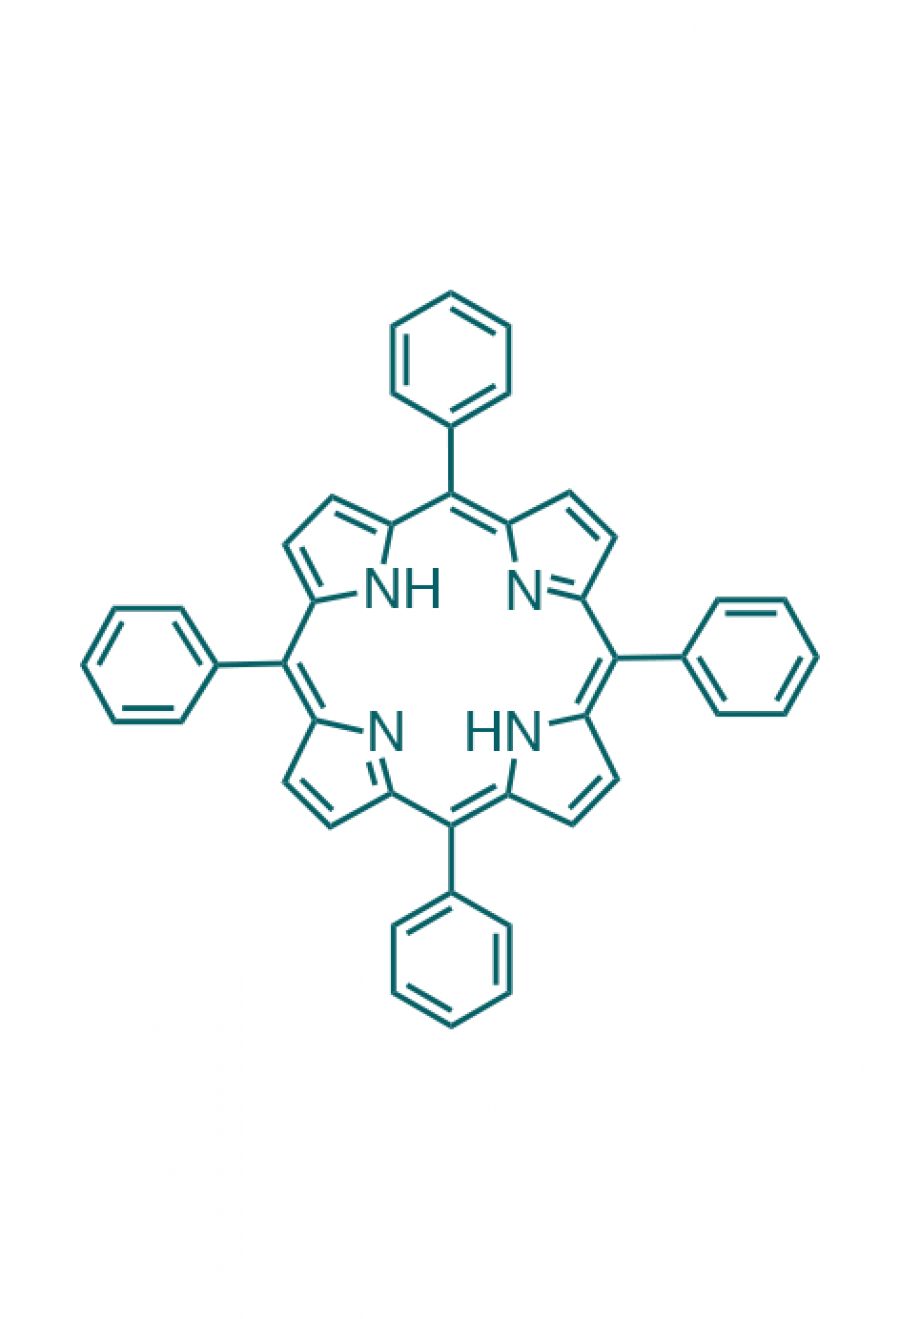 5,10,15,20-(tetraphenyl)porphyrin  | Porphychem Expert porphyrin synthesis for research & industry